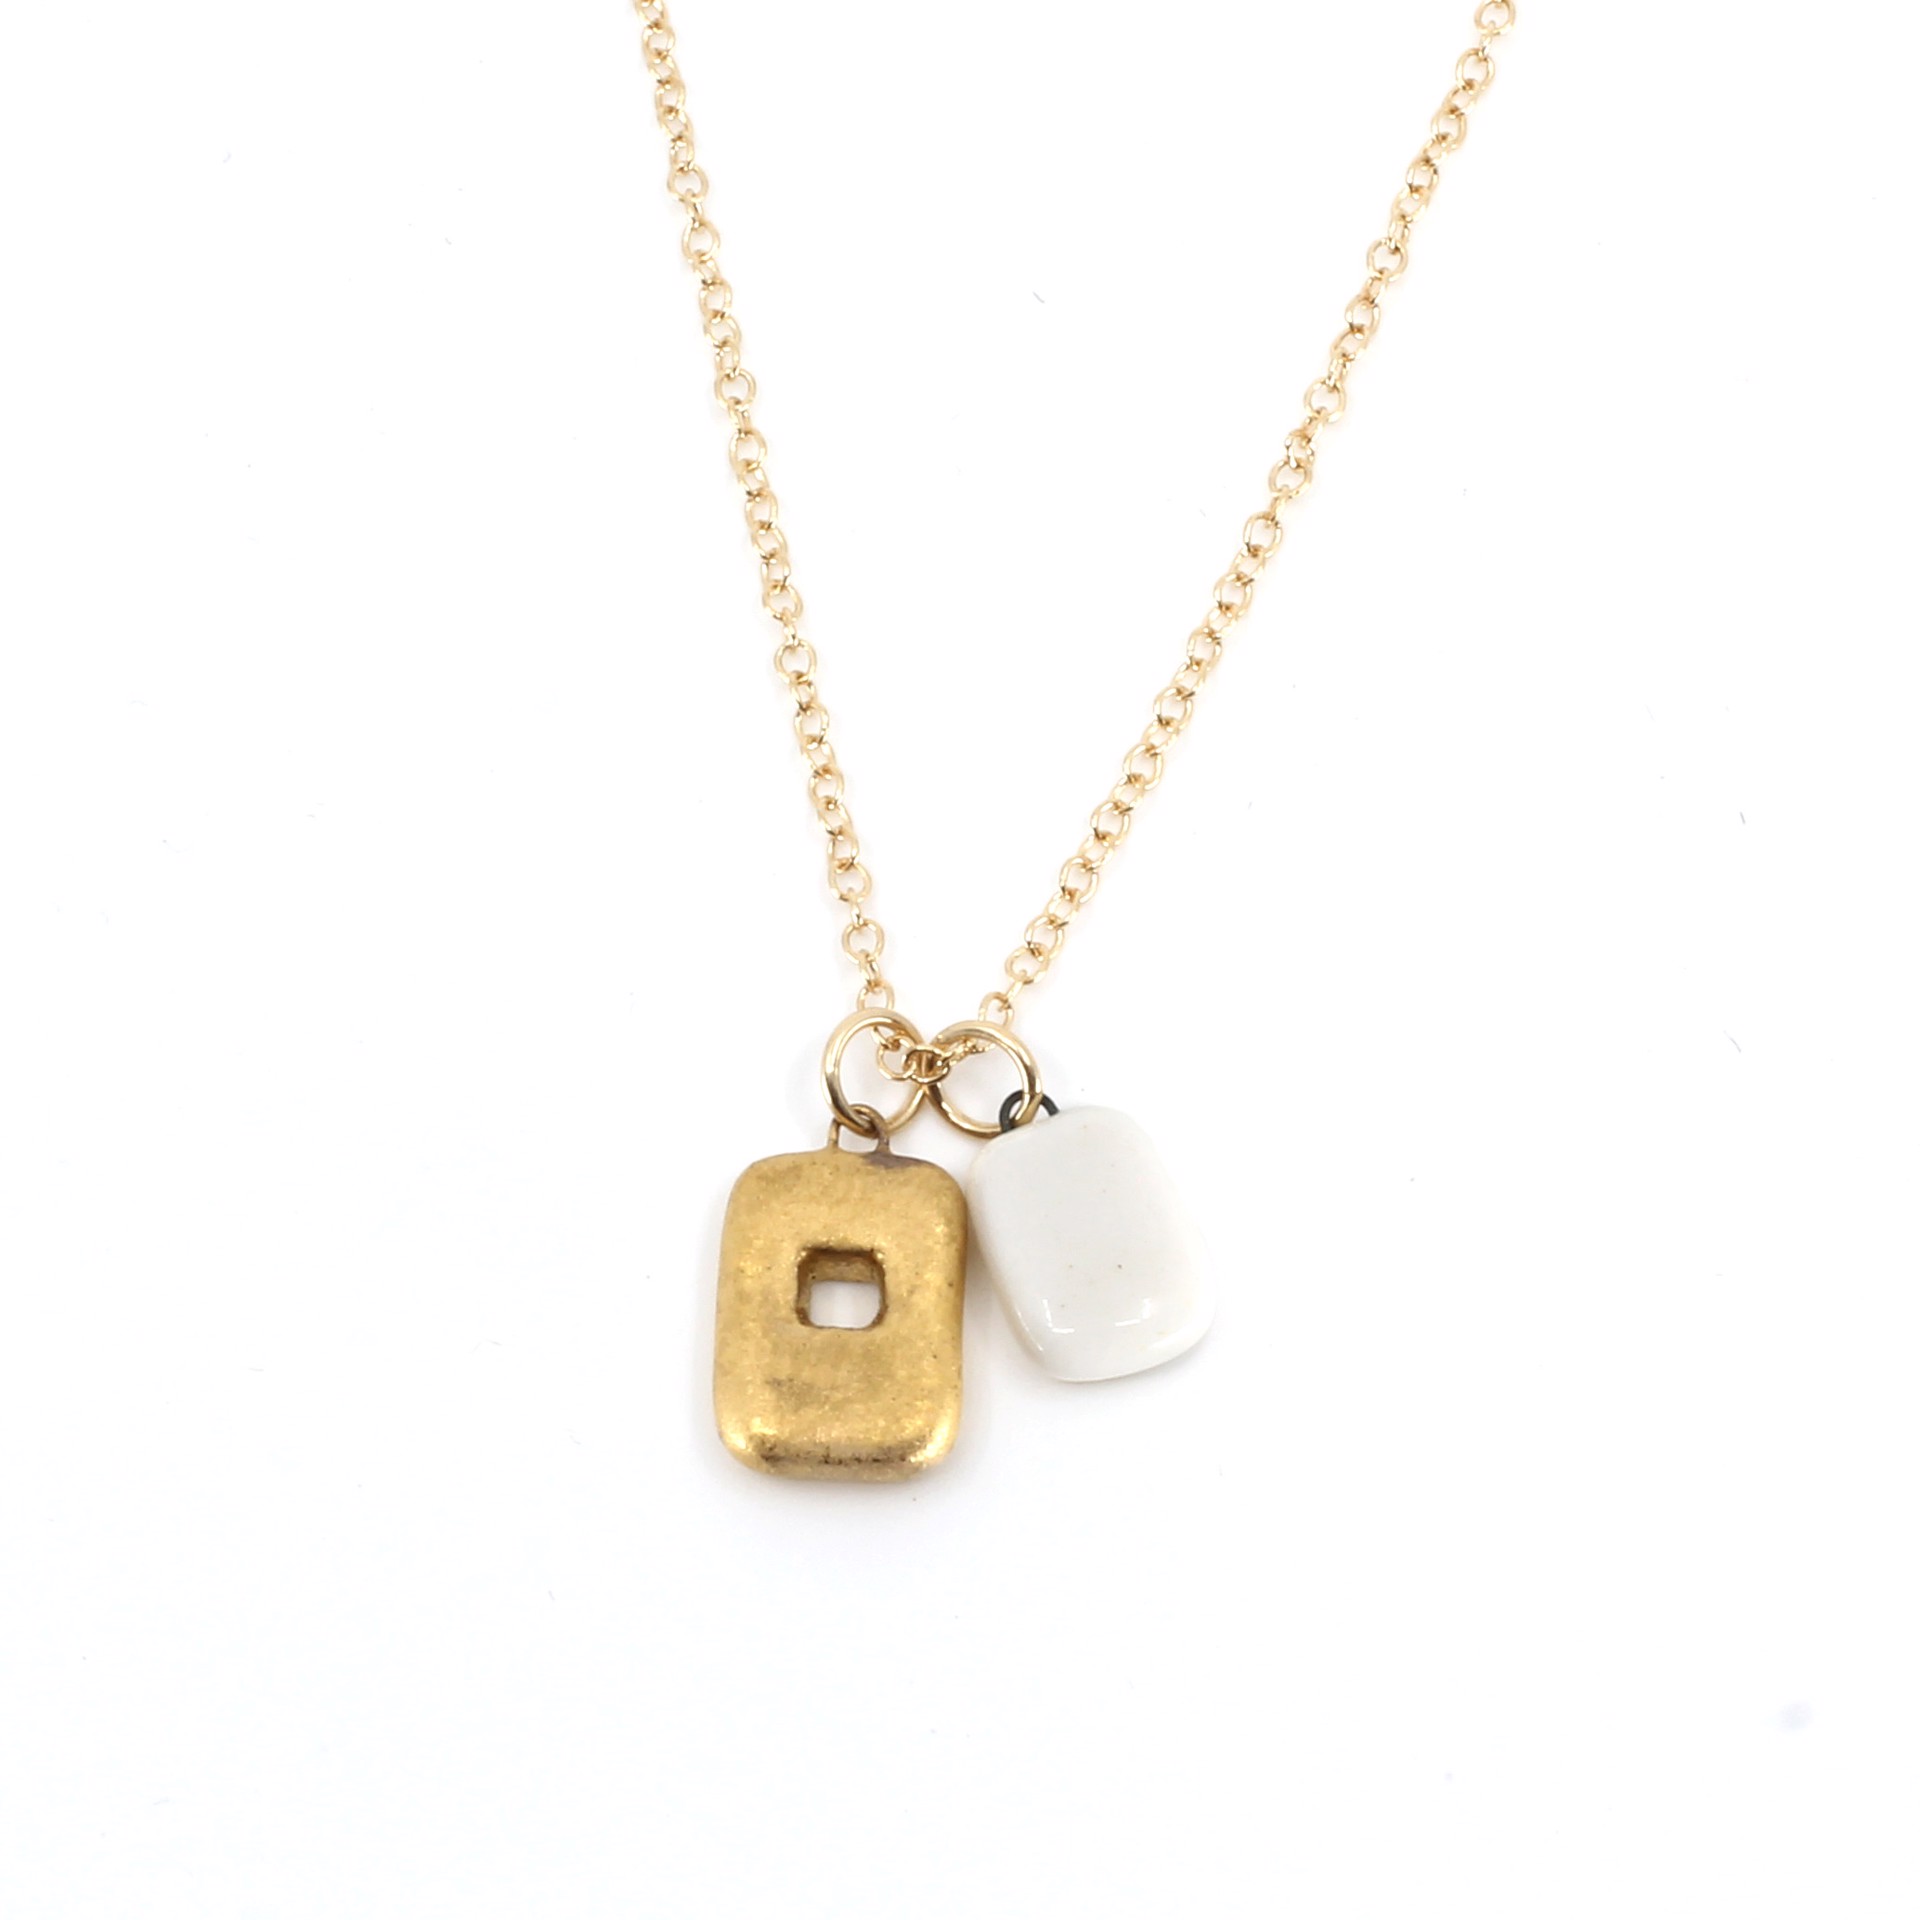 White + Gold Charm Necklace by Jessica Wertz